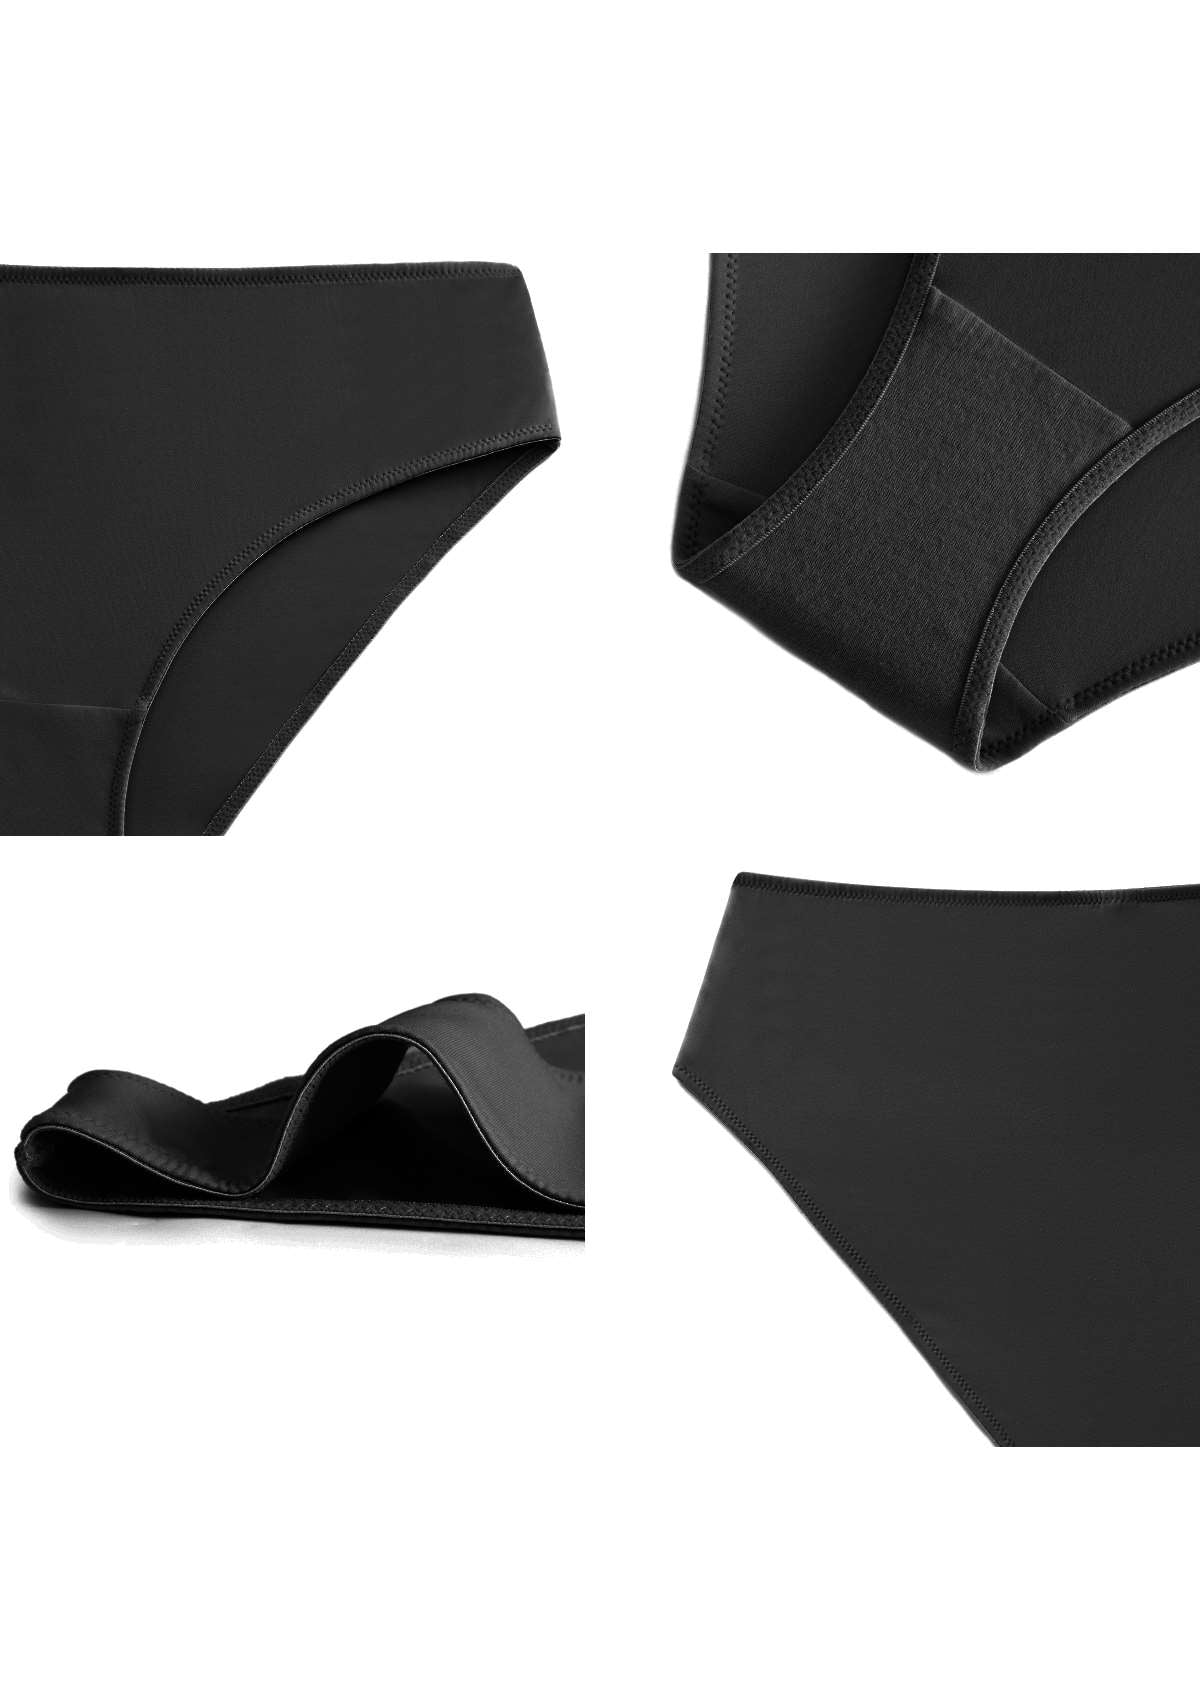 HSIA Patricia Smooth Soft Stretch Comfort High-Rise Brief Underwear - M / Beige